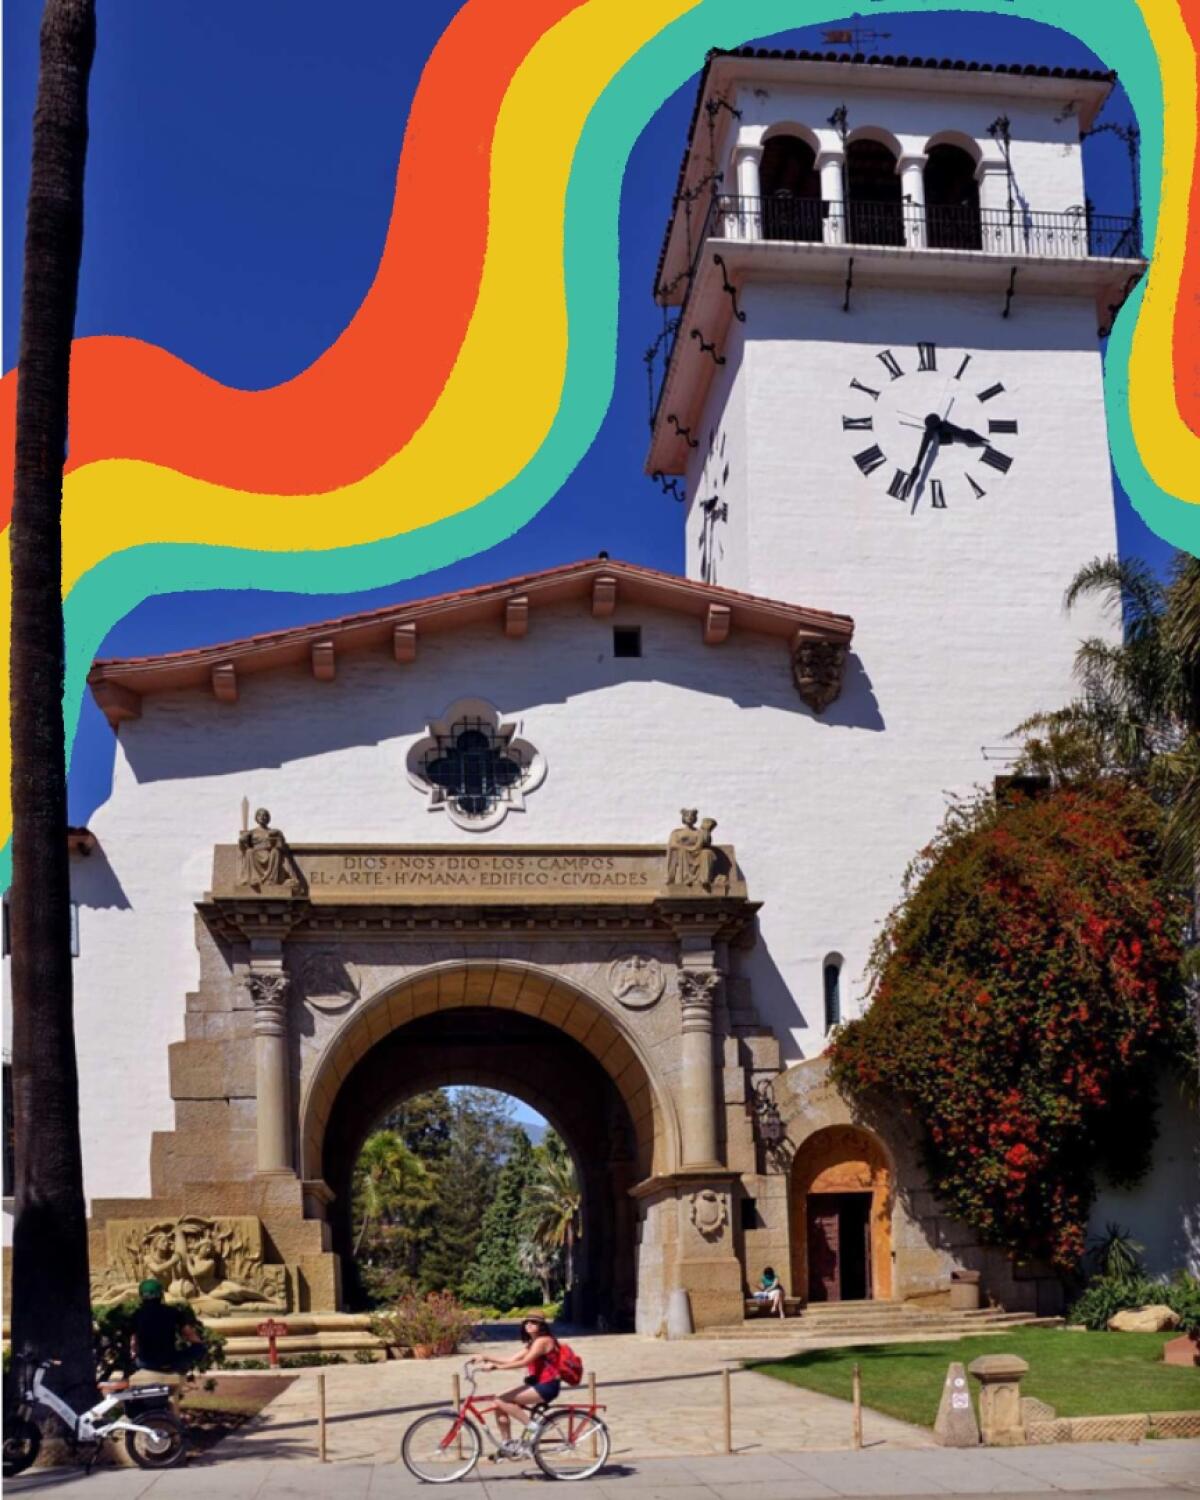 Kamala Harris and Doug Emhoff were married at the Santa Barbara courthouse.